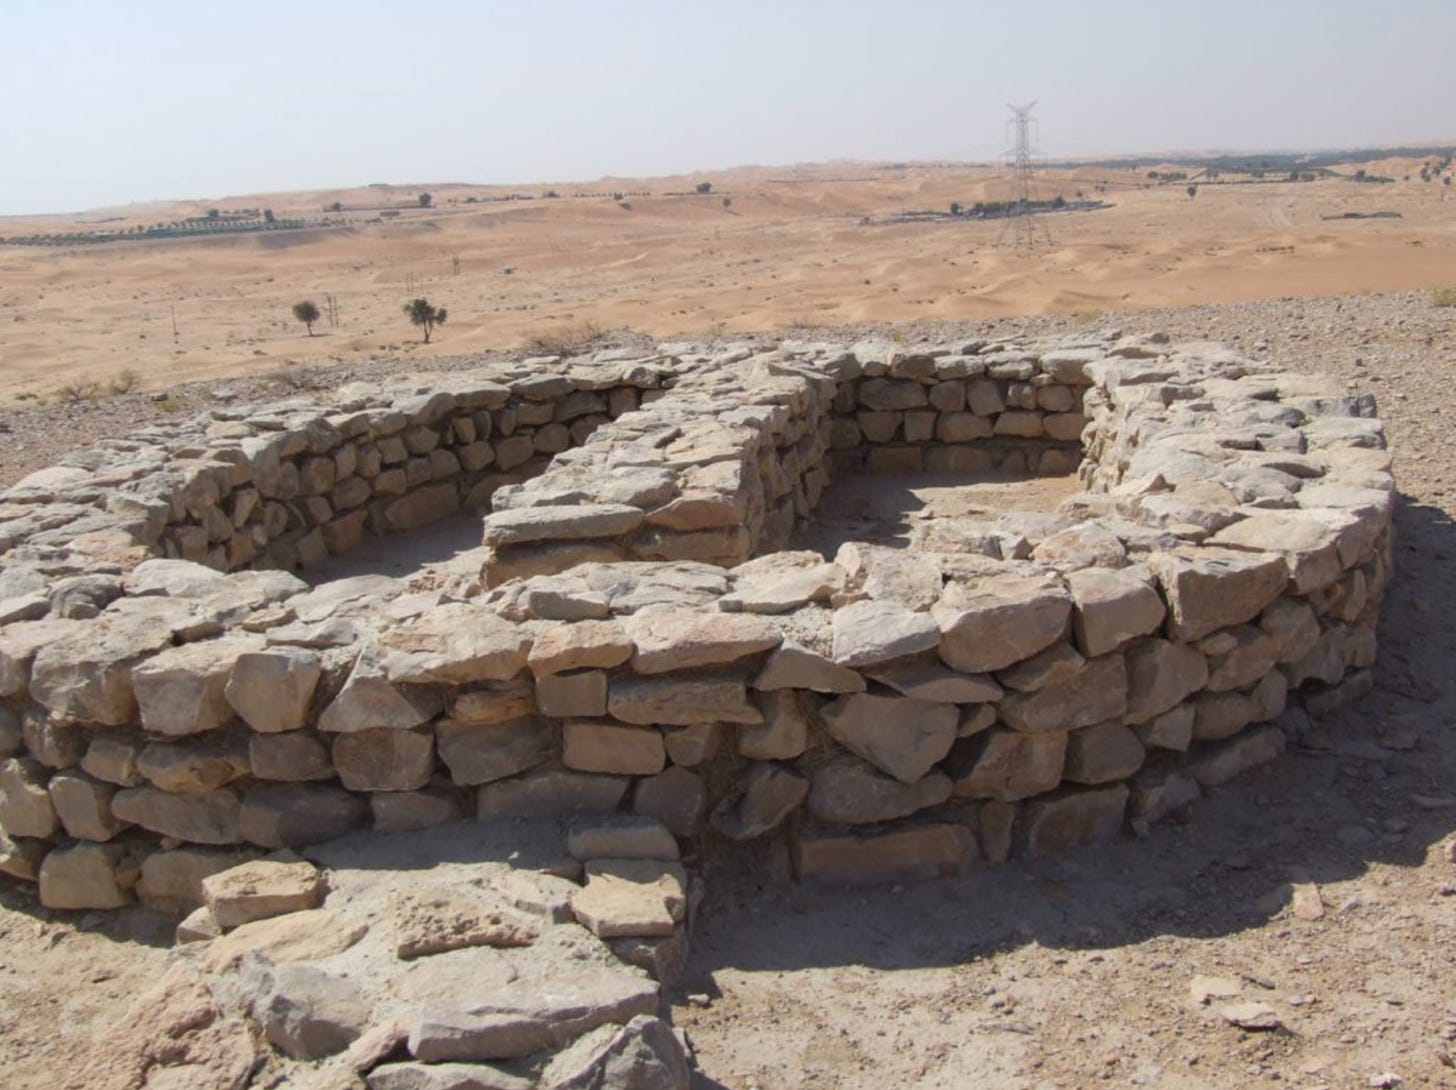 Iron age grave site at Bida Bint Saud